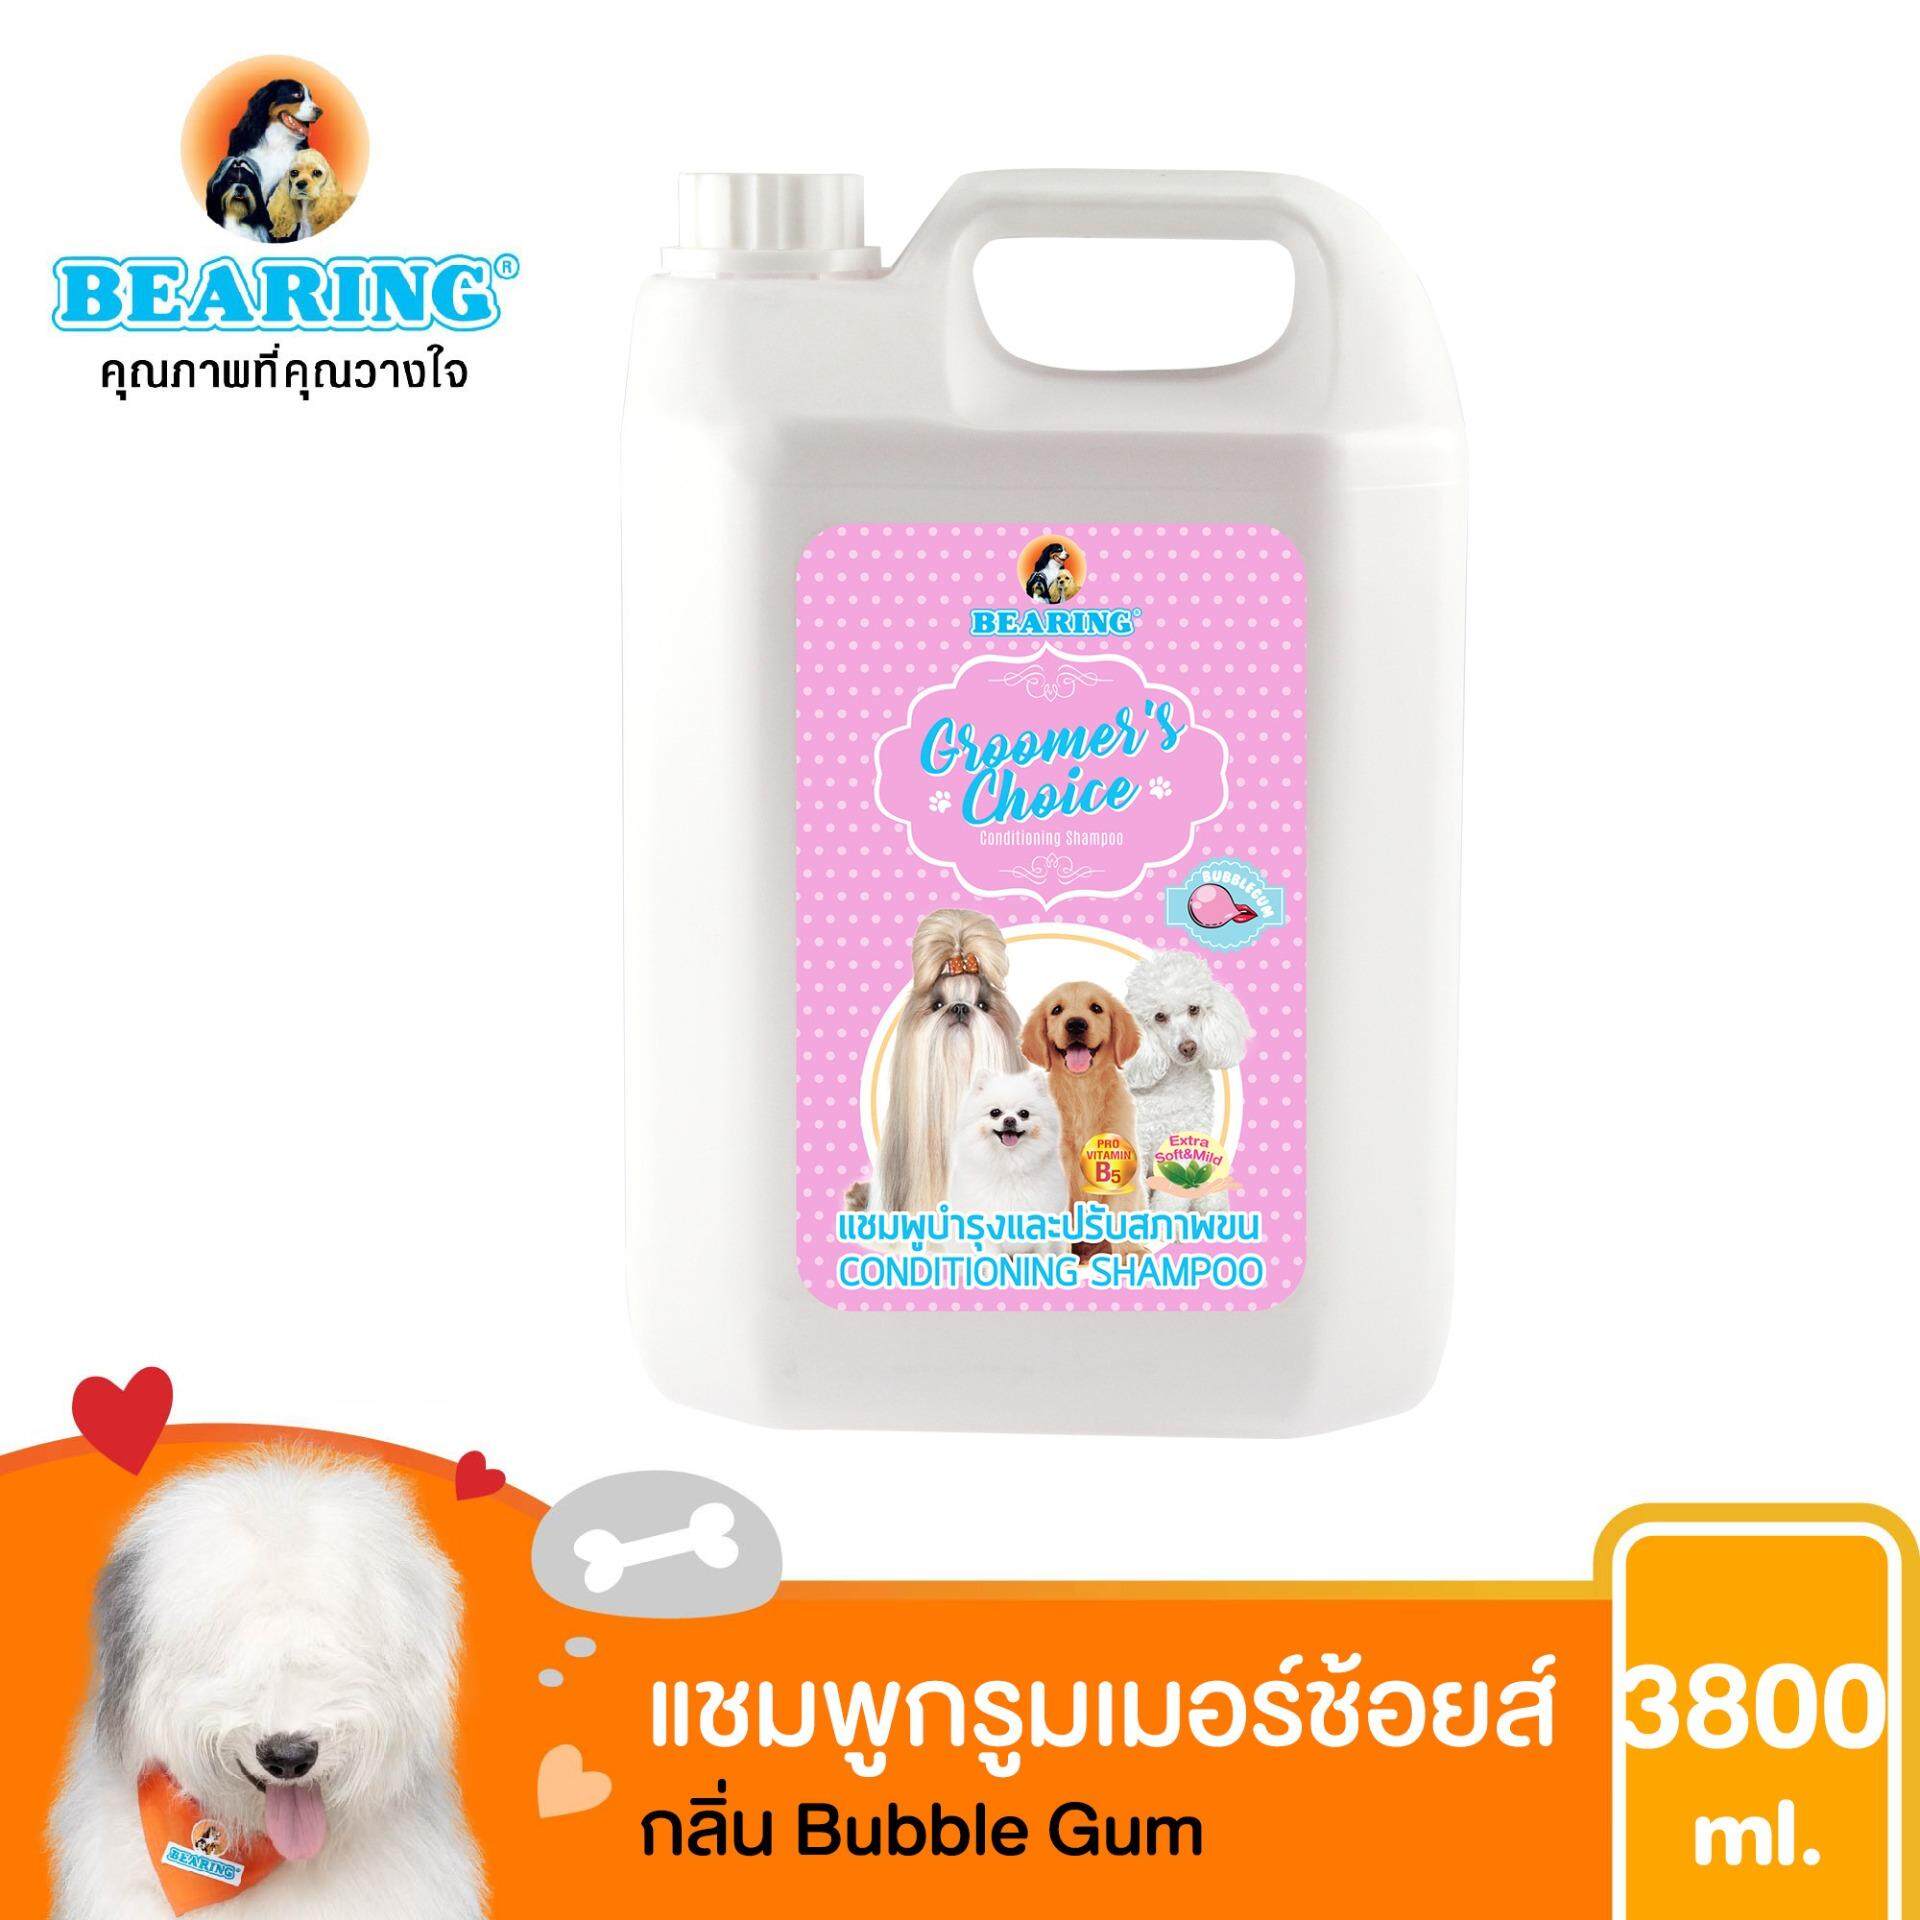 BEARING Groomer's Choice Conditioning Shampoo 3800 ml. กลิ่น  Bubble gum